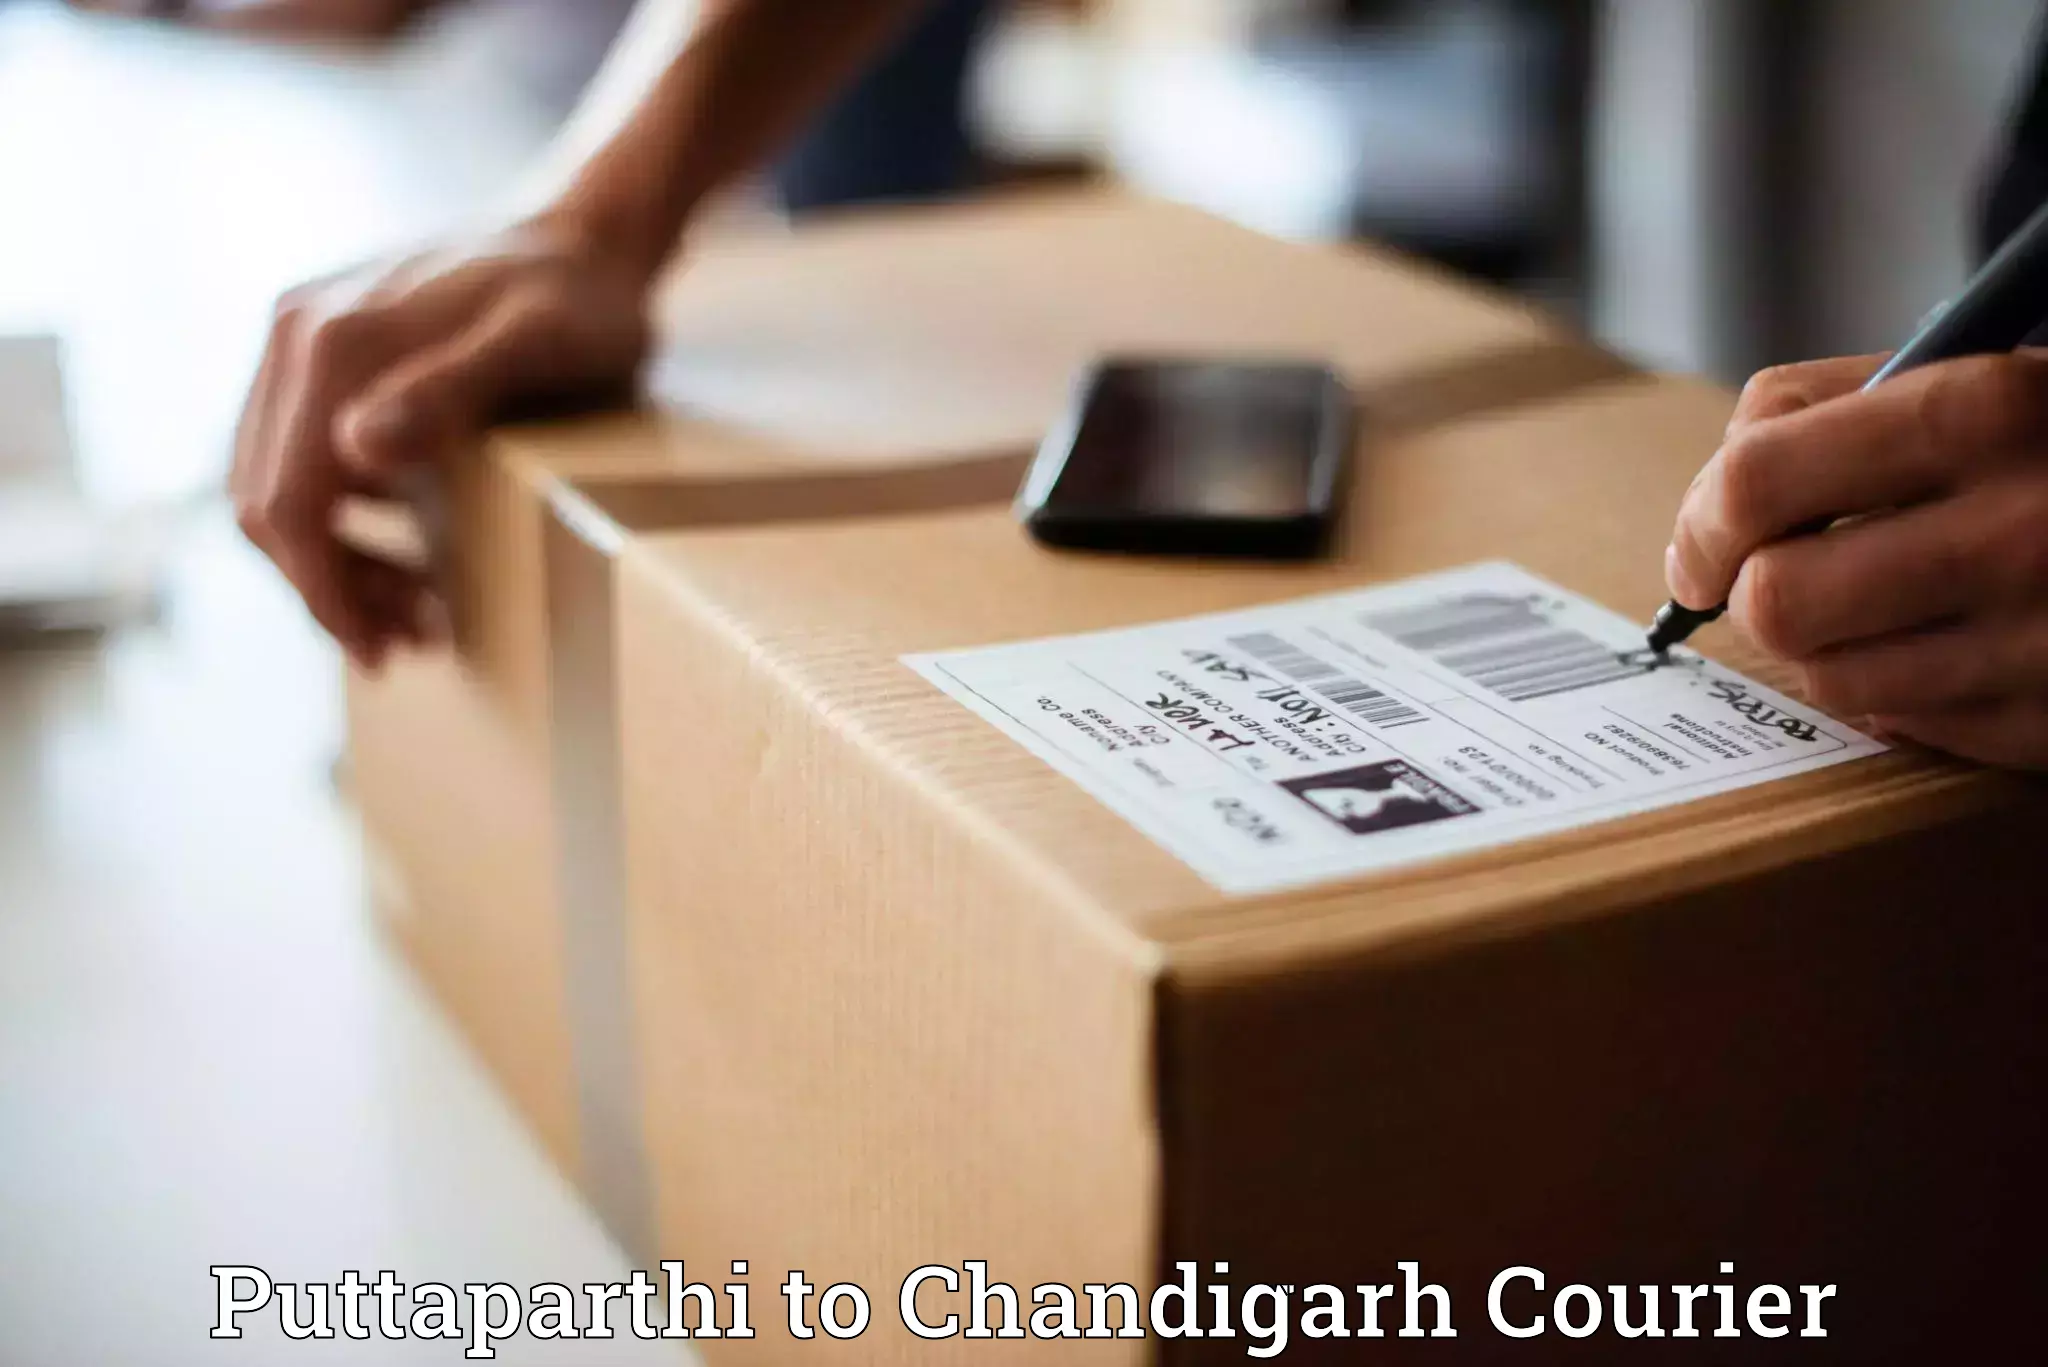 Logistics service provider Puttaparthi to Chandigarh